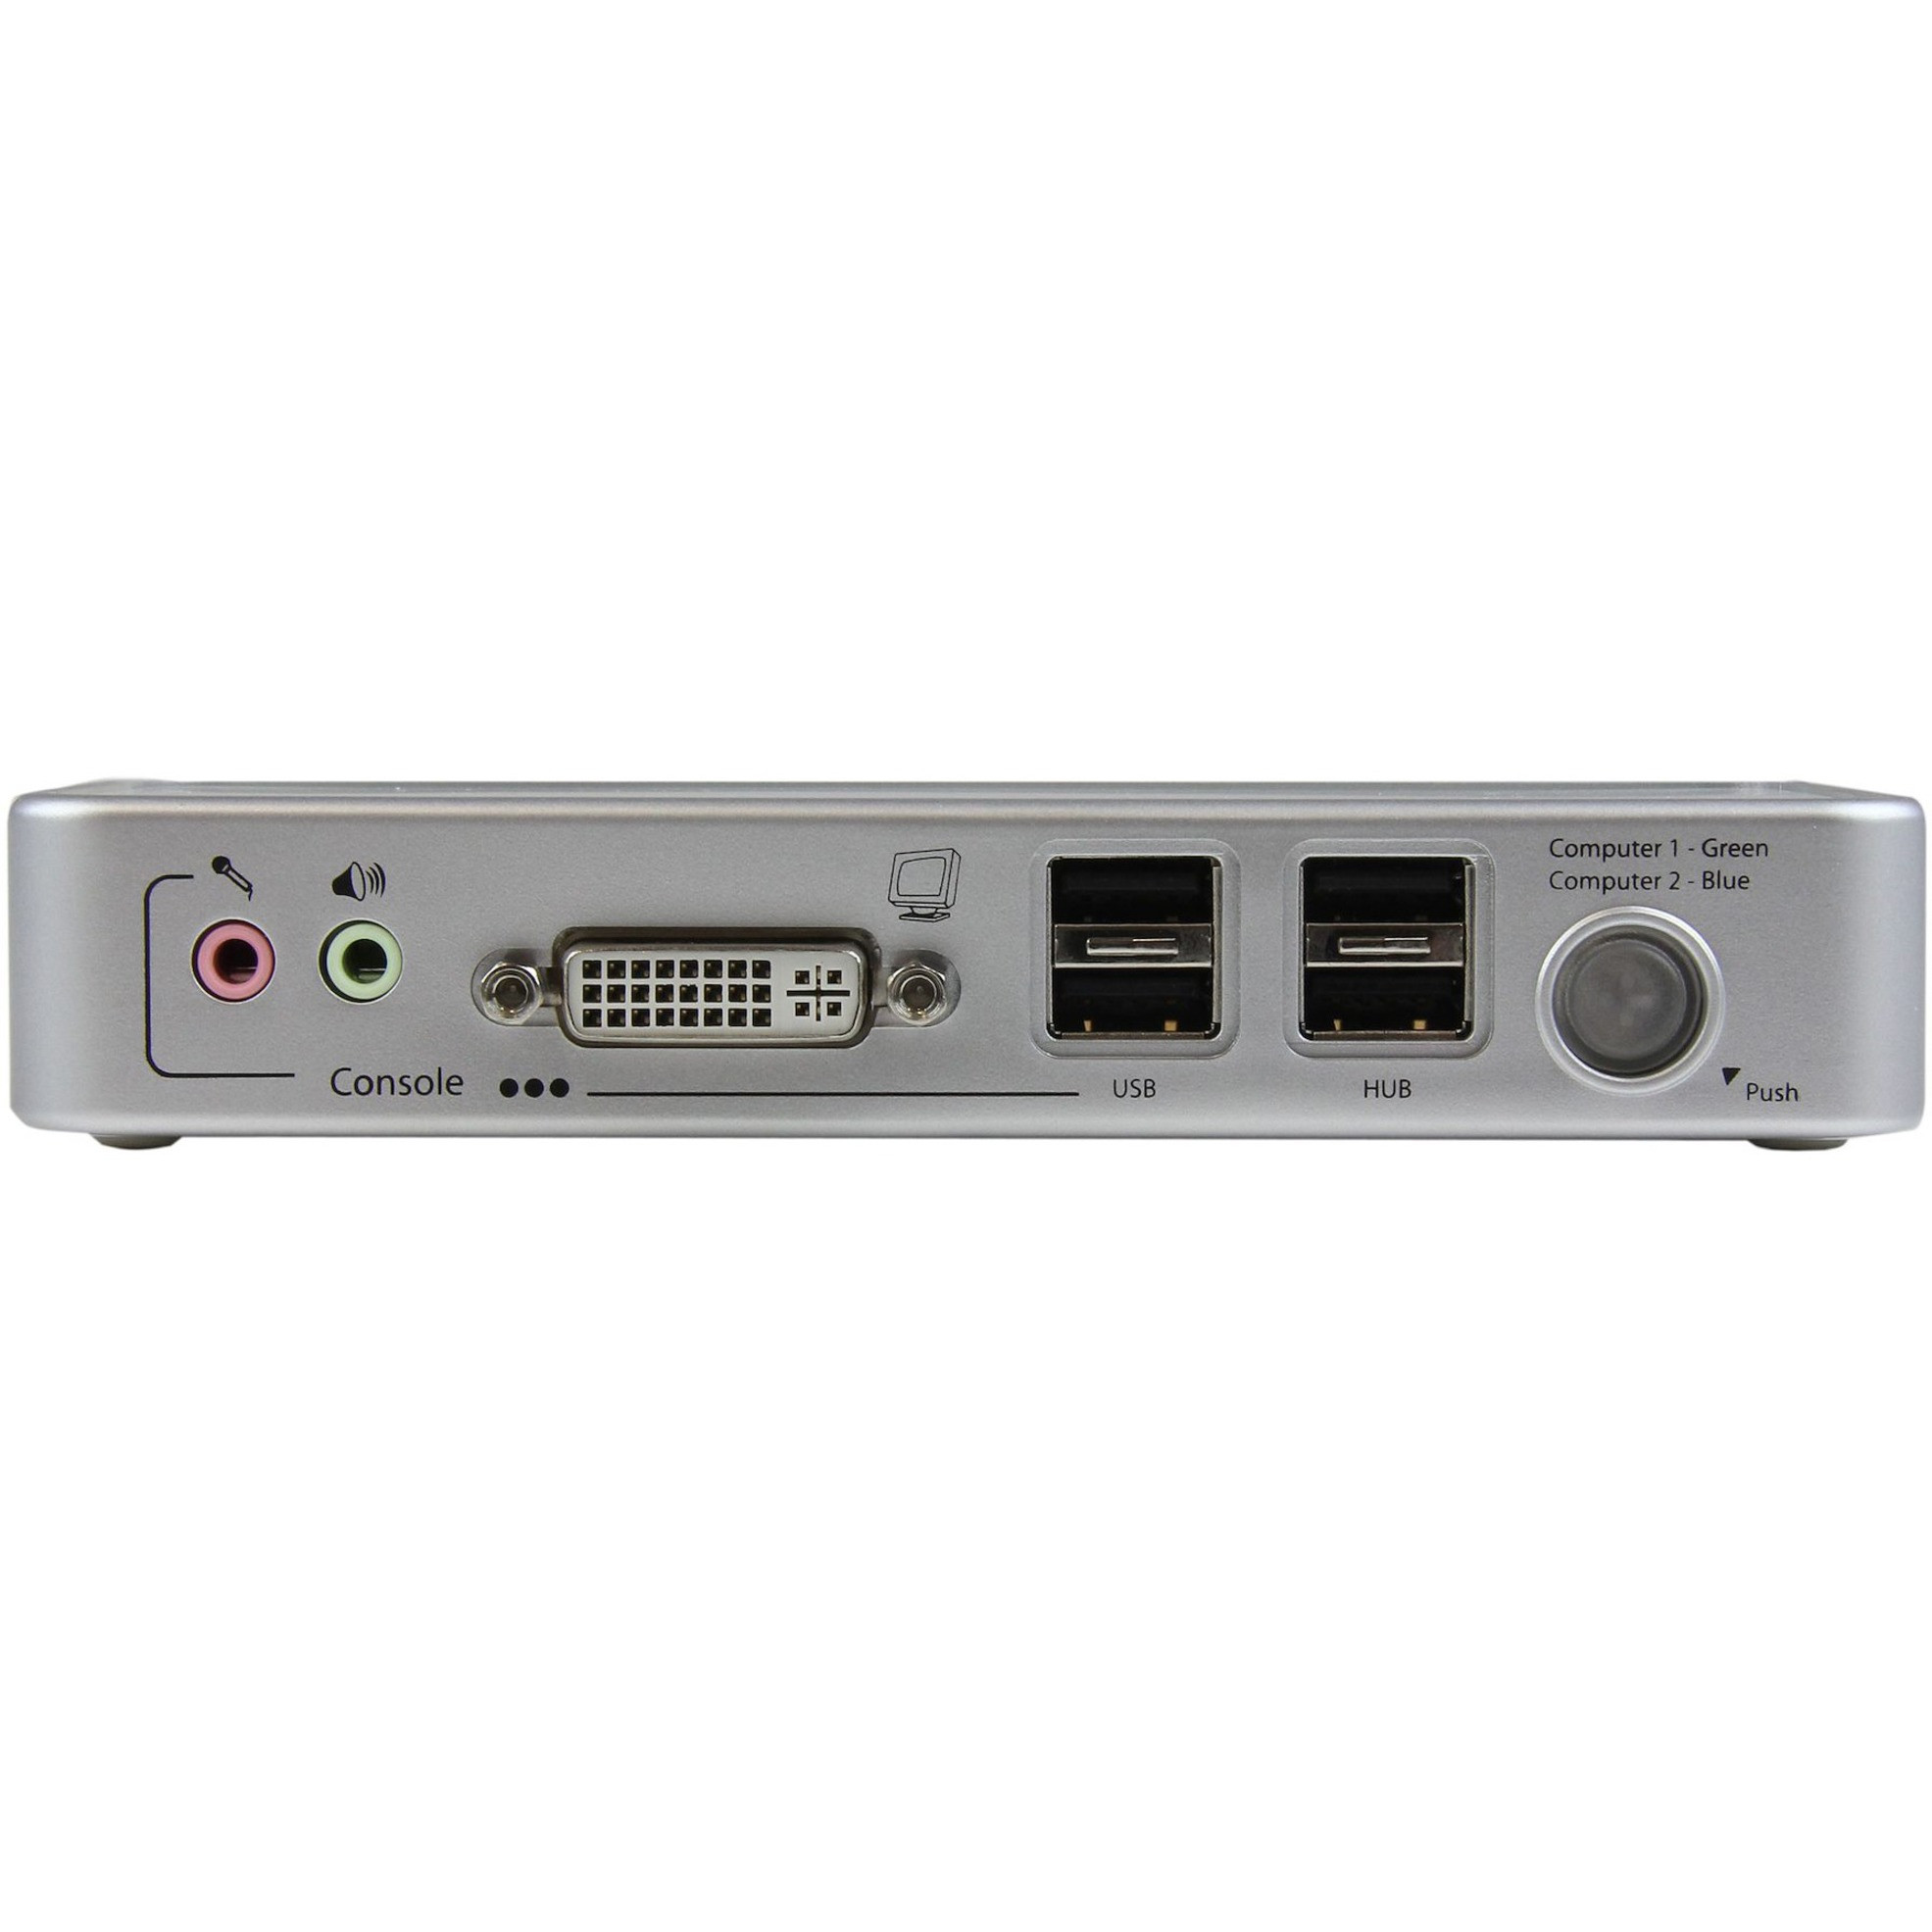 Startech .com 2 Port USB DVI KVM Switch Kit with Cables USB 2.0 Hub & AudioUSB DVI KVM with and Audio SwitchingKVM / audio / USB s... - Corporate Armor